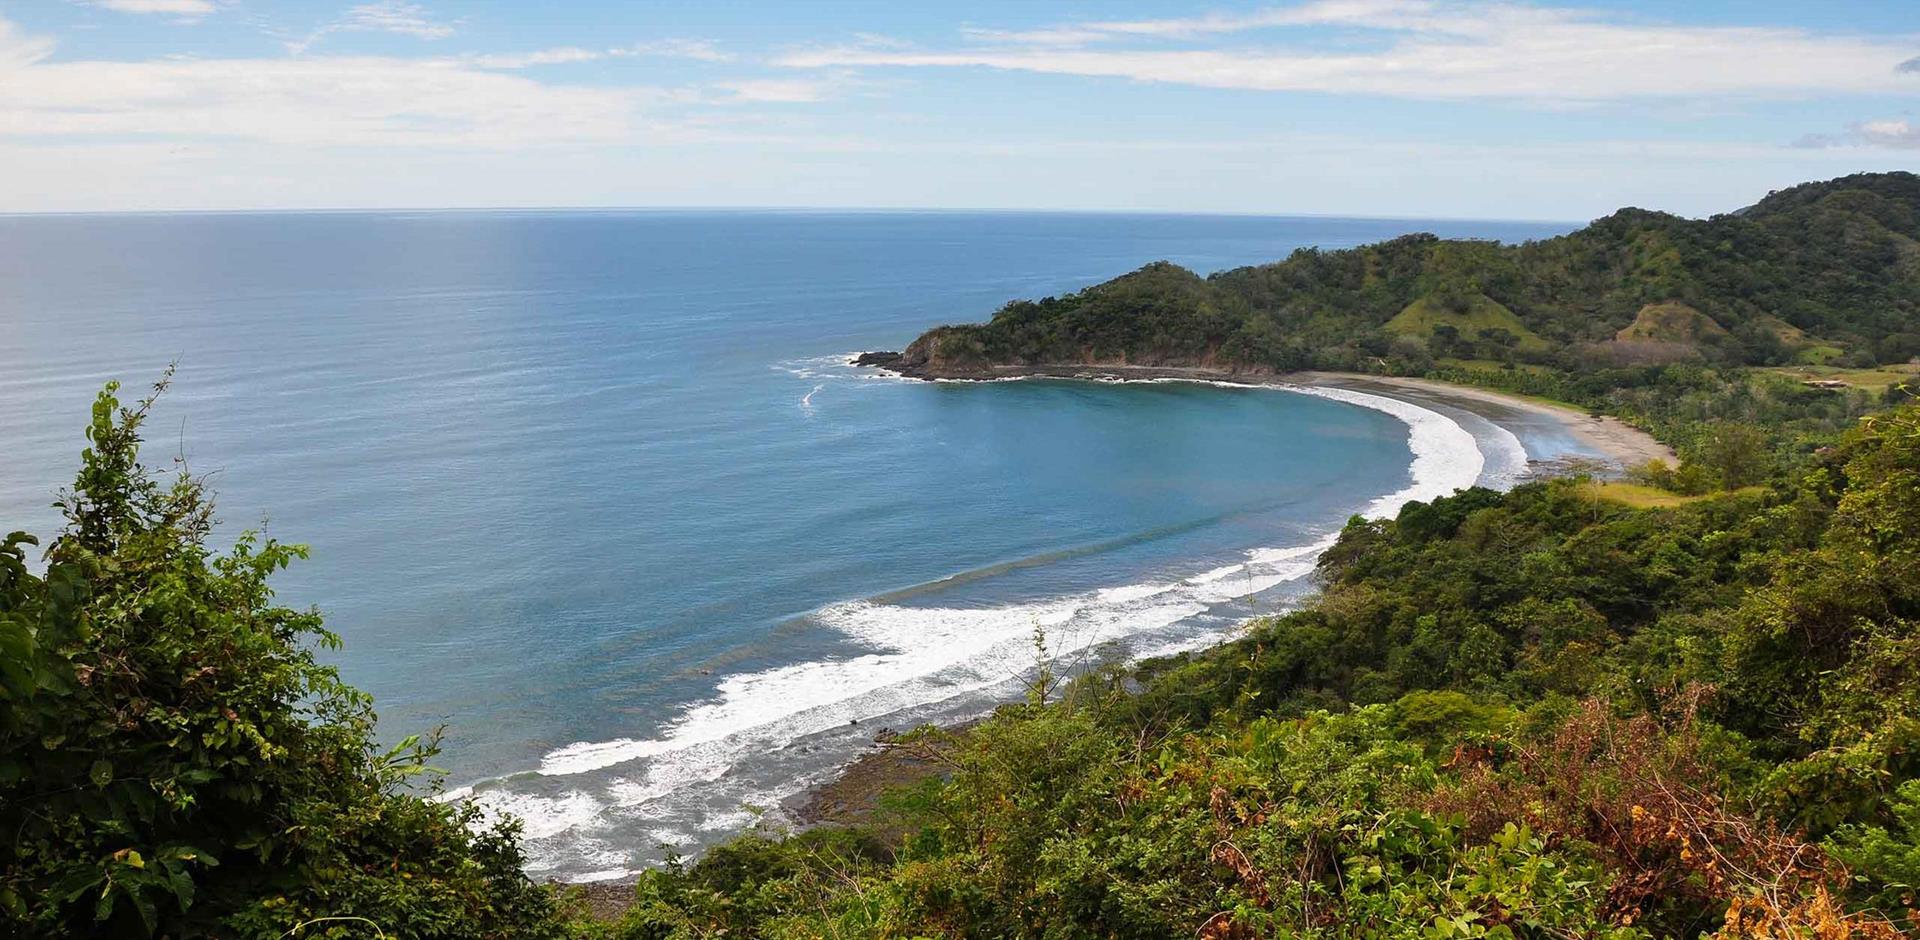 Nicoya Peninsula, Costa Rica